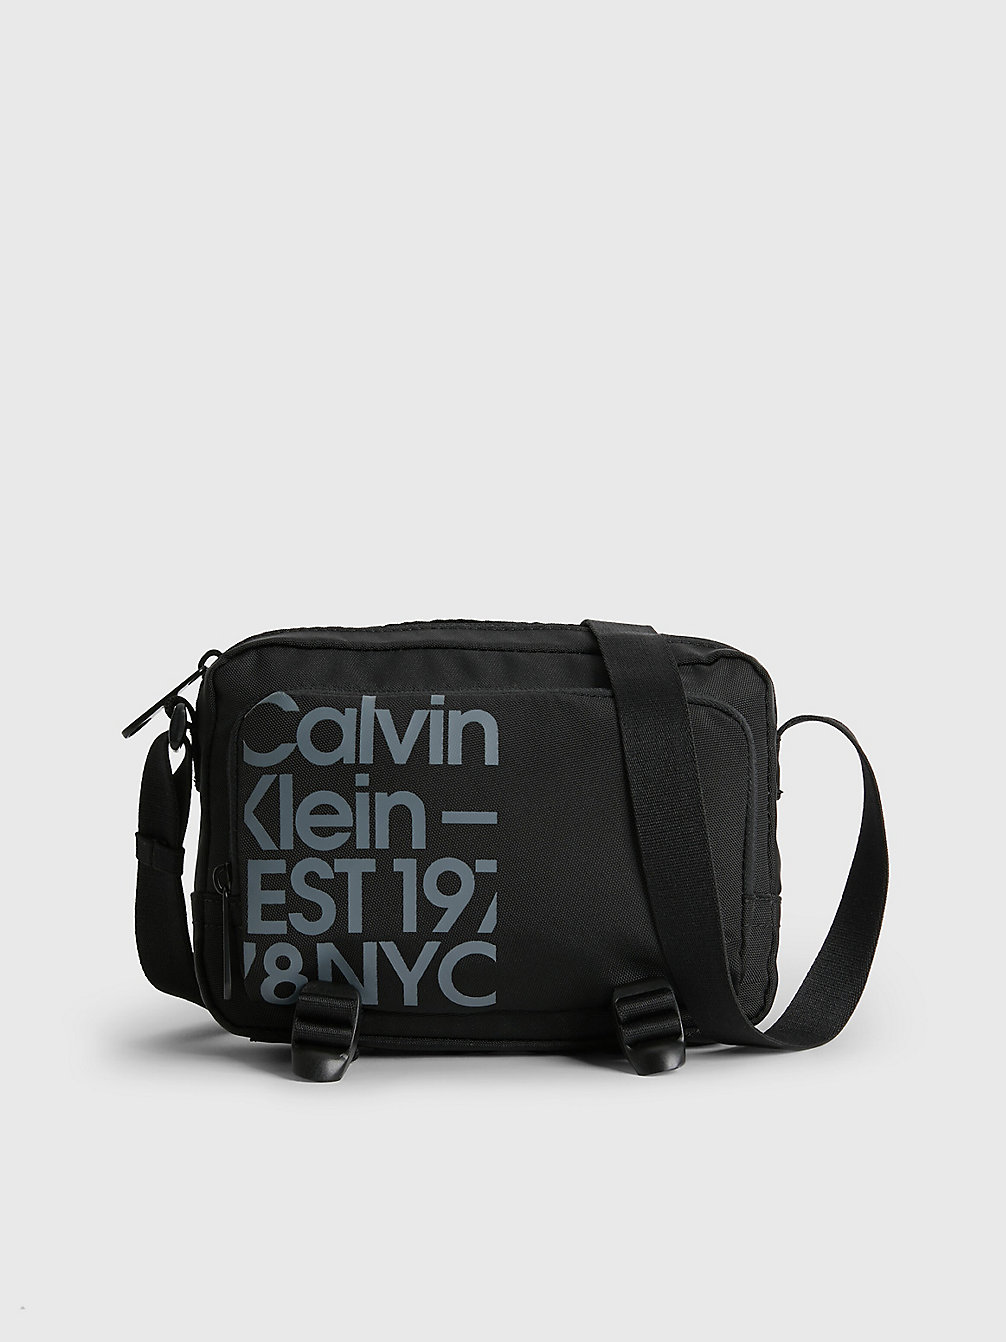 BLACK / OVERCAST GREY PRINT Crossbody Bag Aus Recyceltem Material undefined Herren Calvin Klein